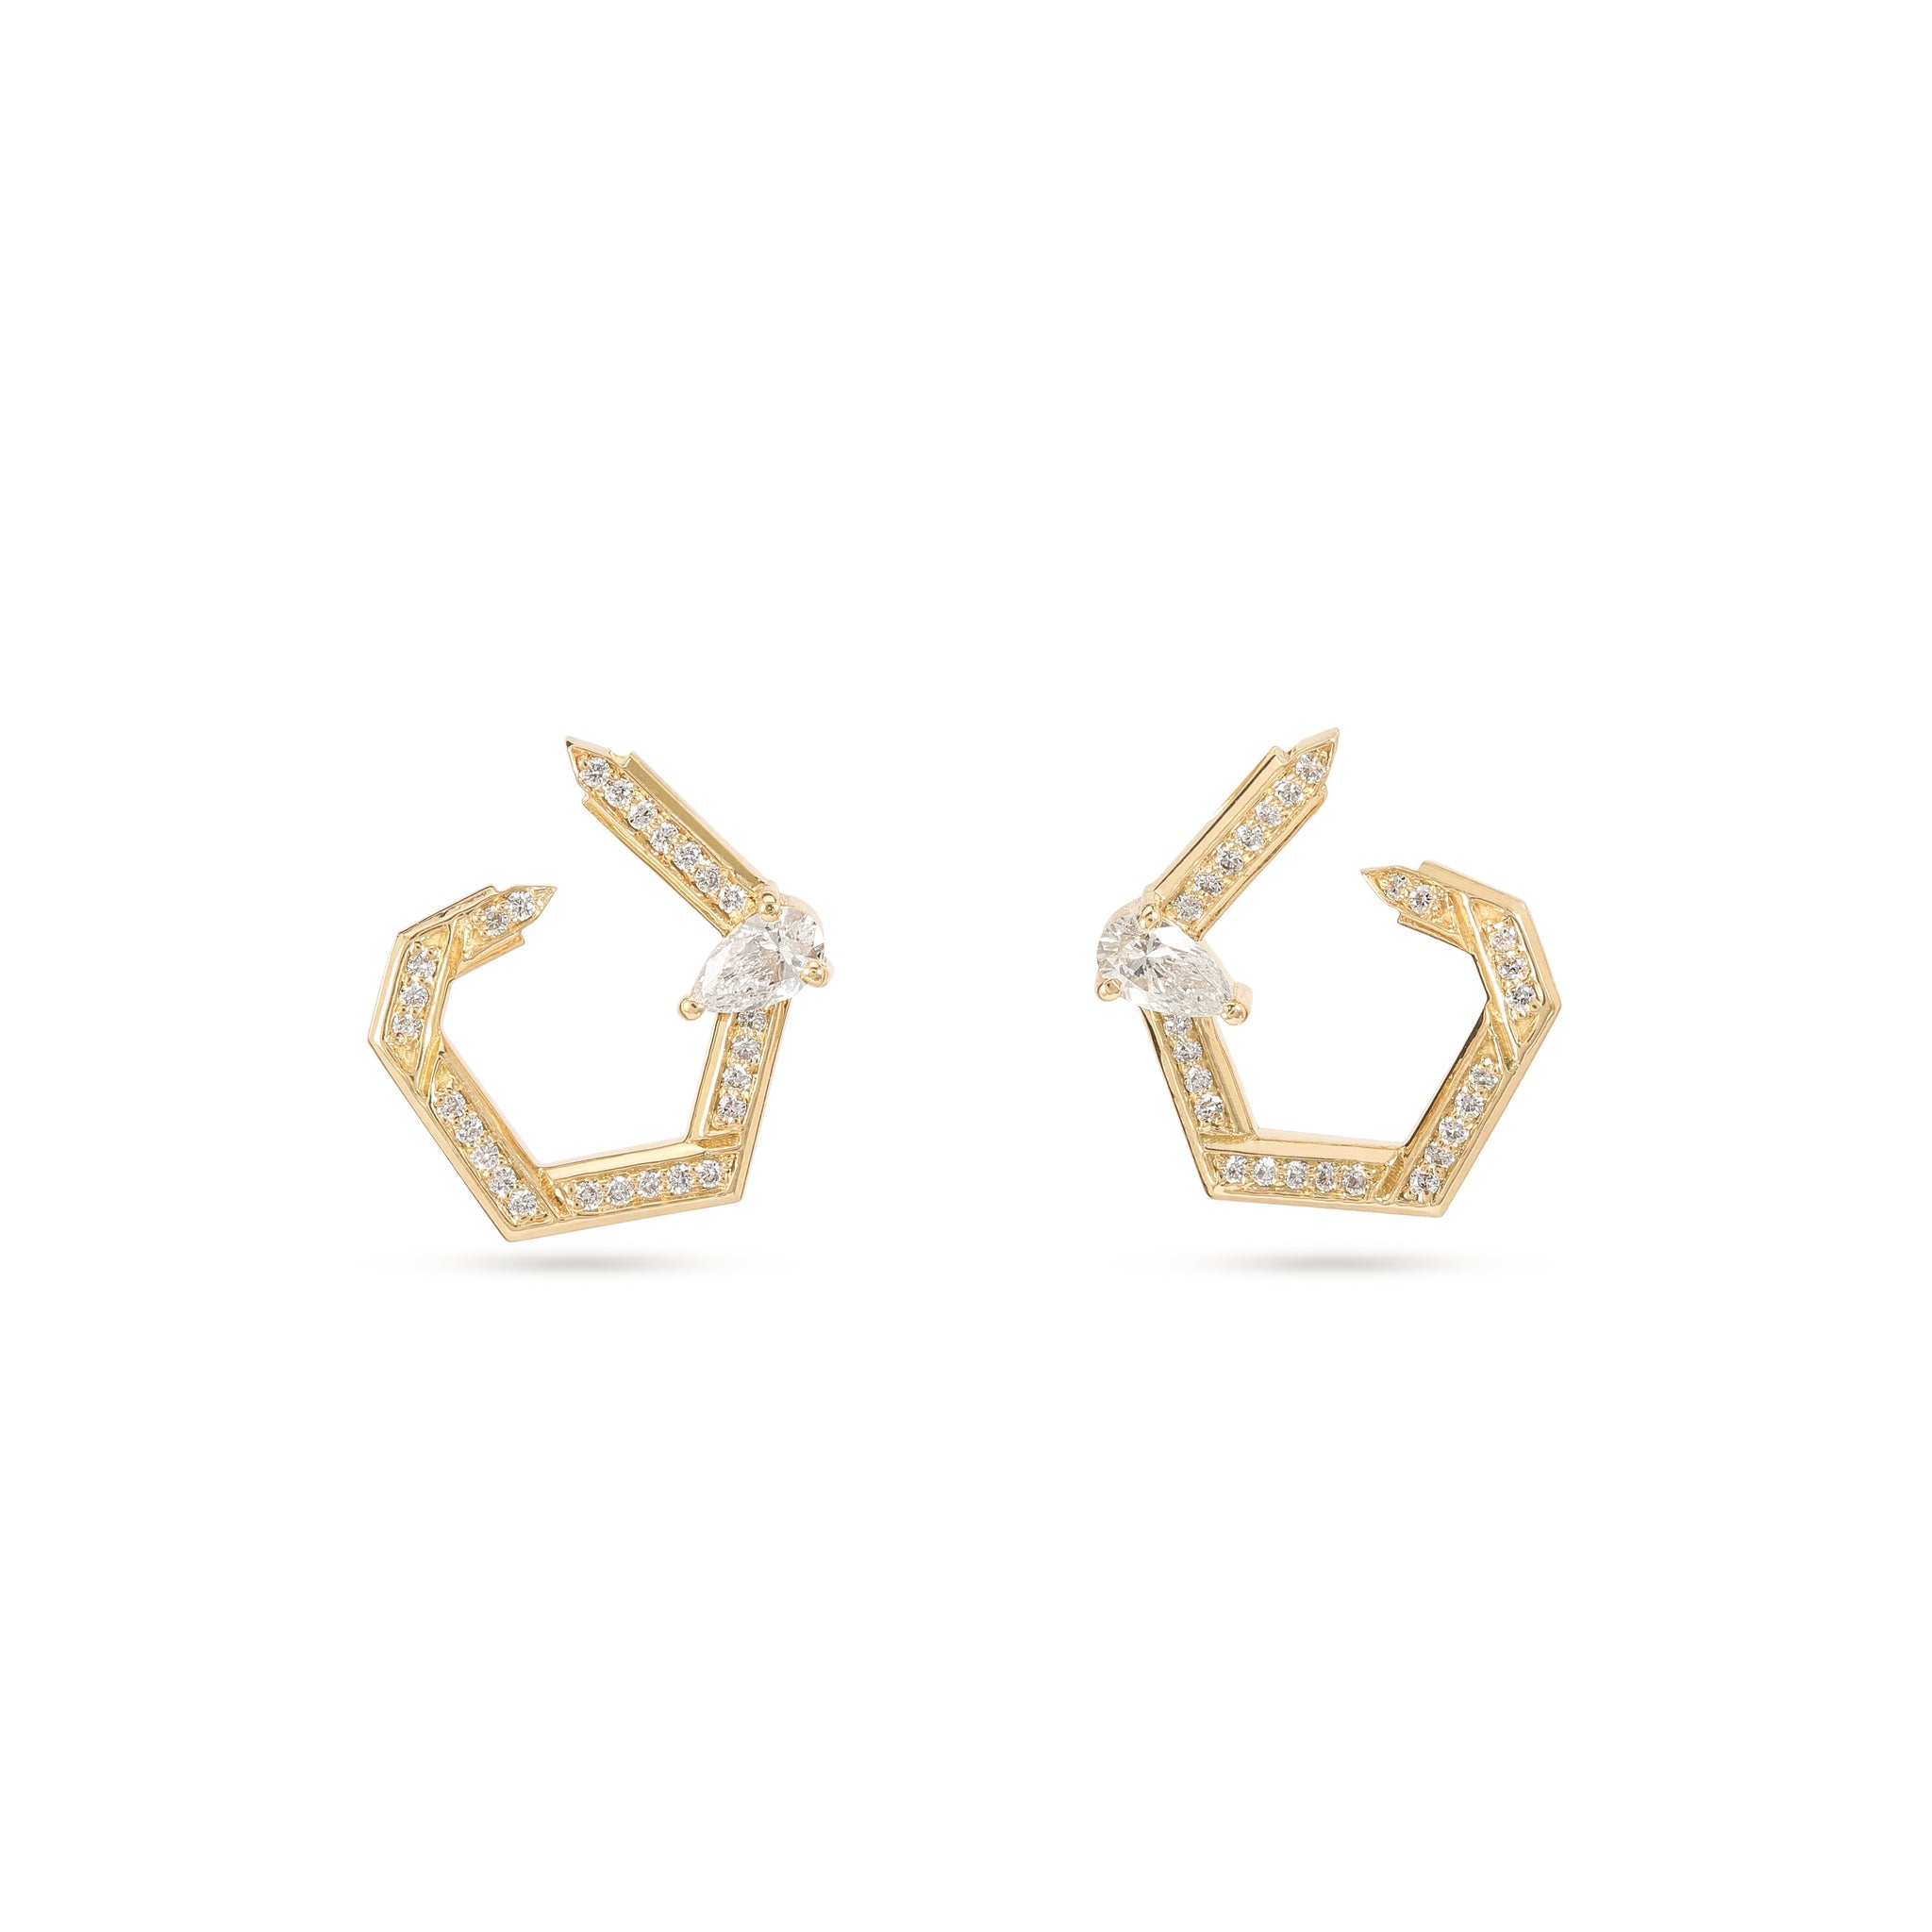 Hexad Diamond Earrings in Yellow Gold